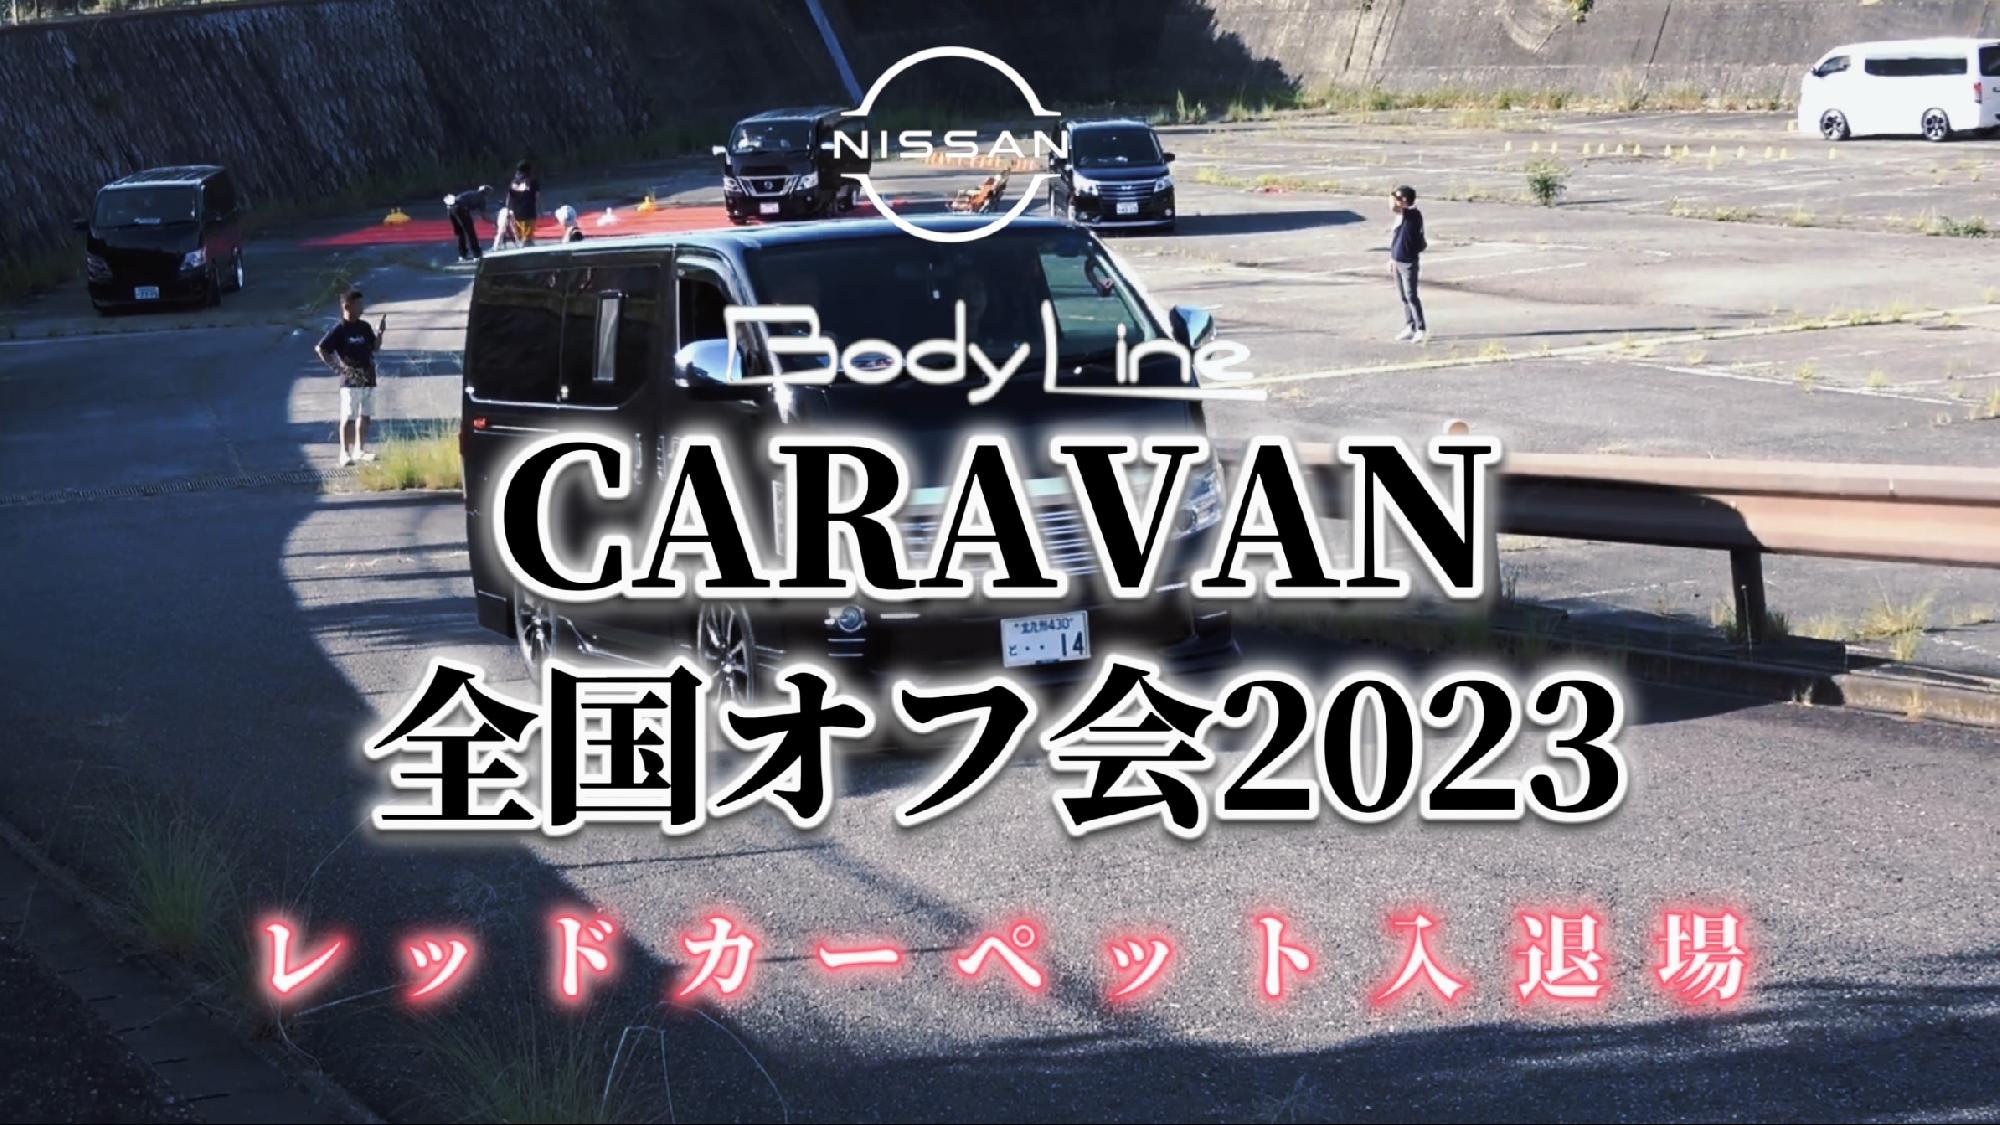  【Body Line】CARAVAN全国オフ会2023〜レッドカーペット入退場〜